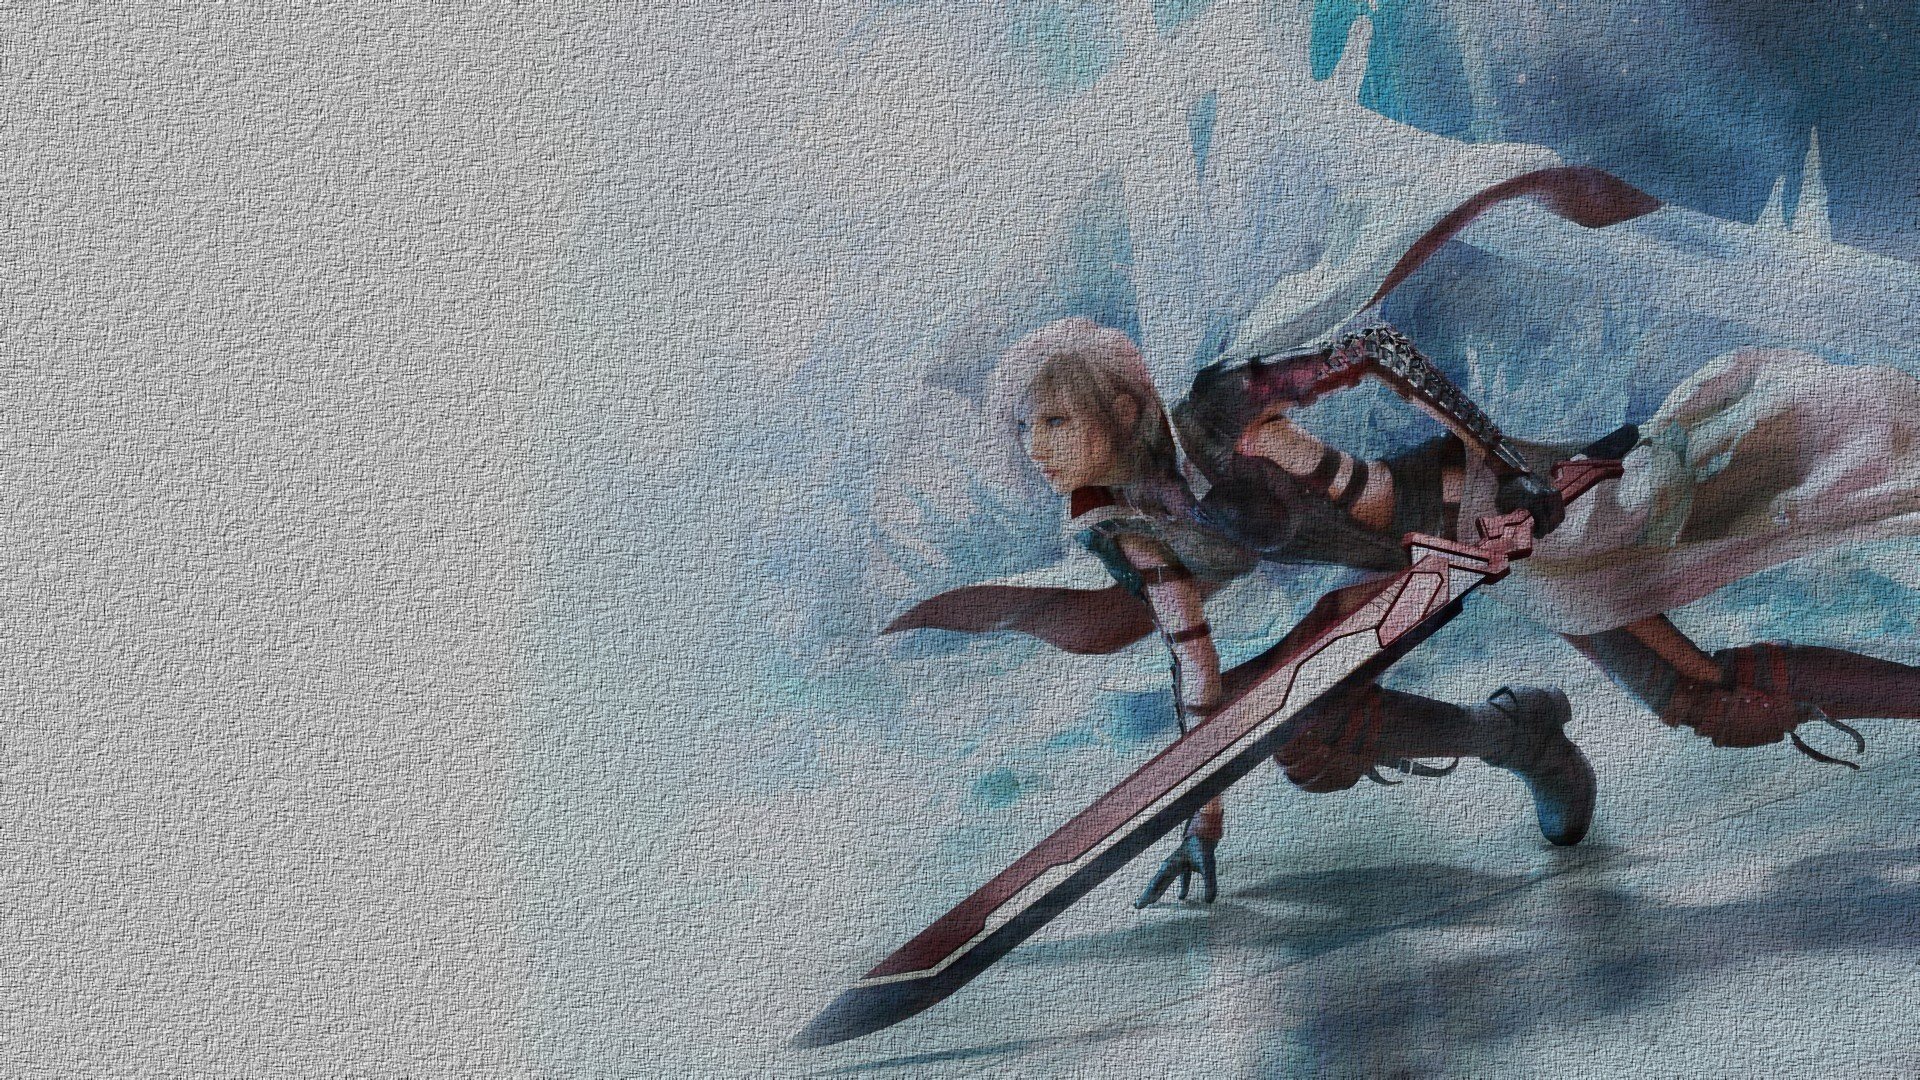 Final Fantasy XIII Wallpaper